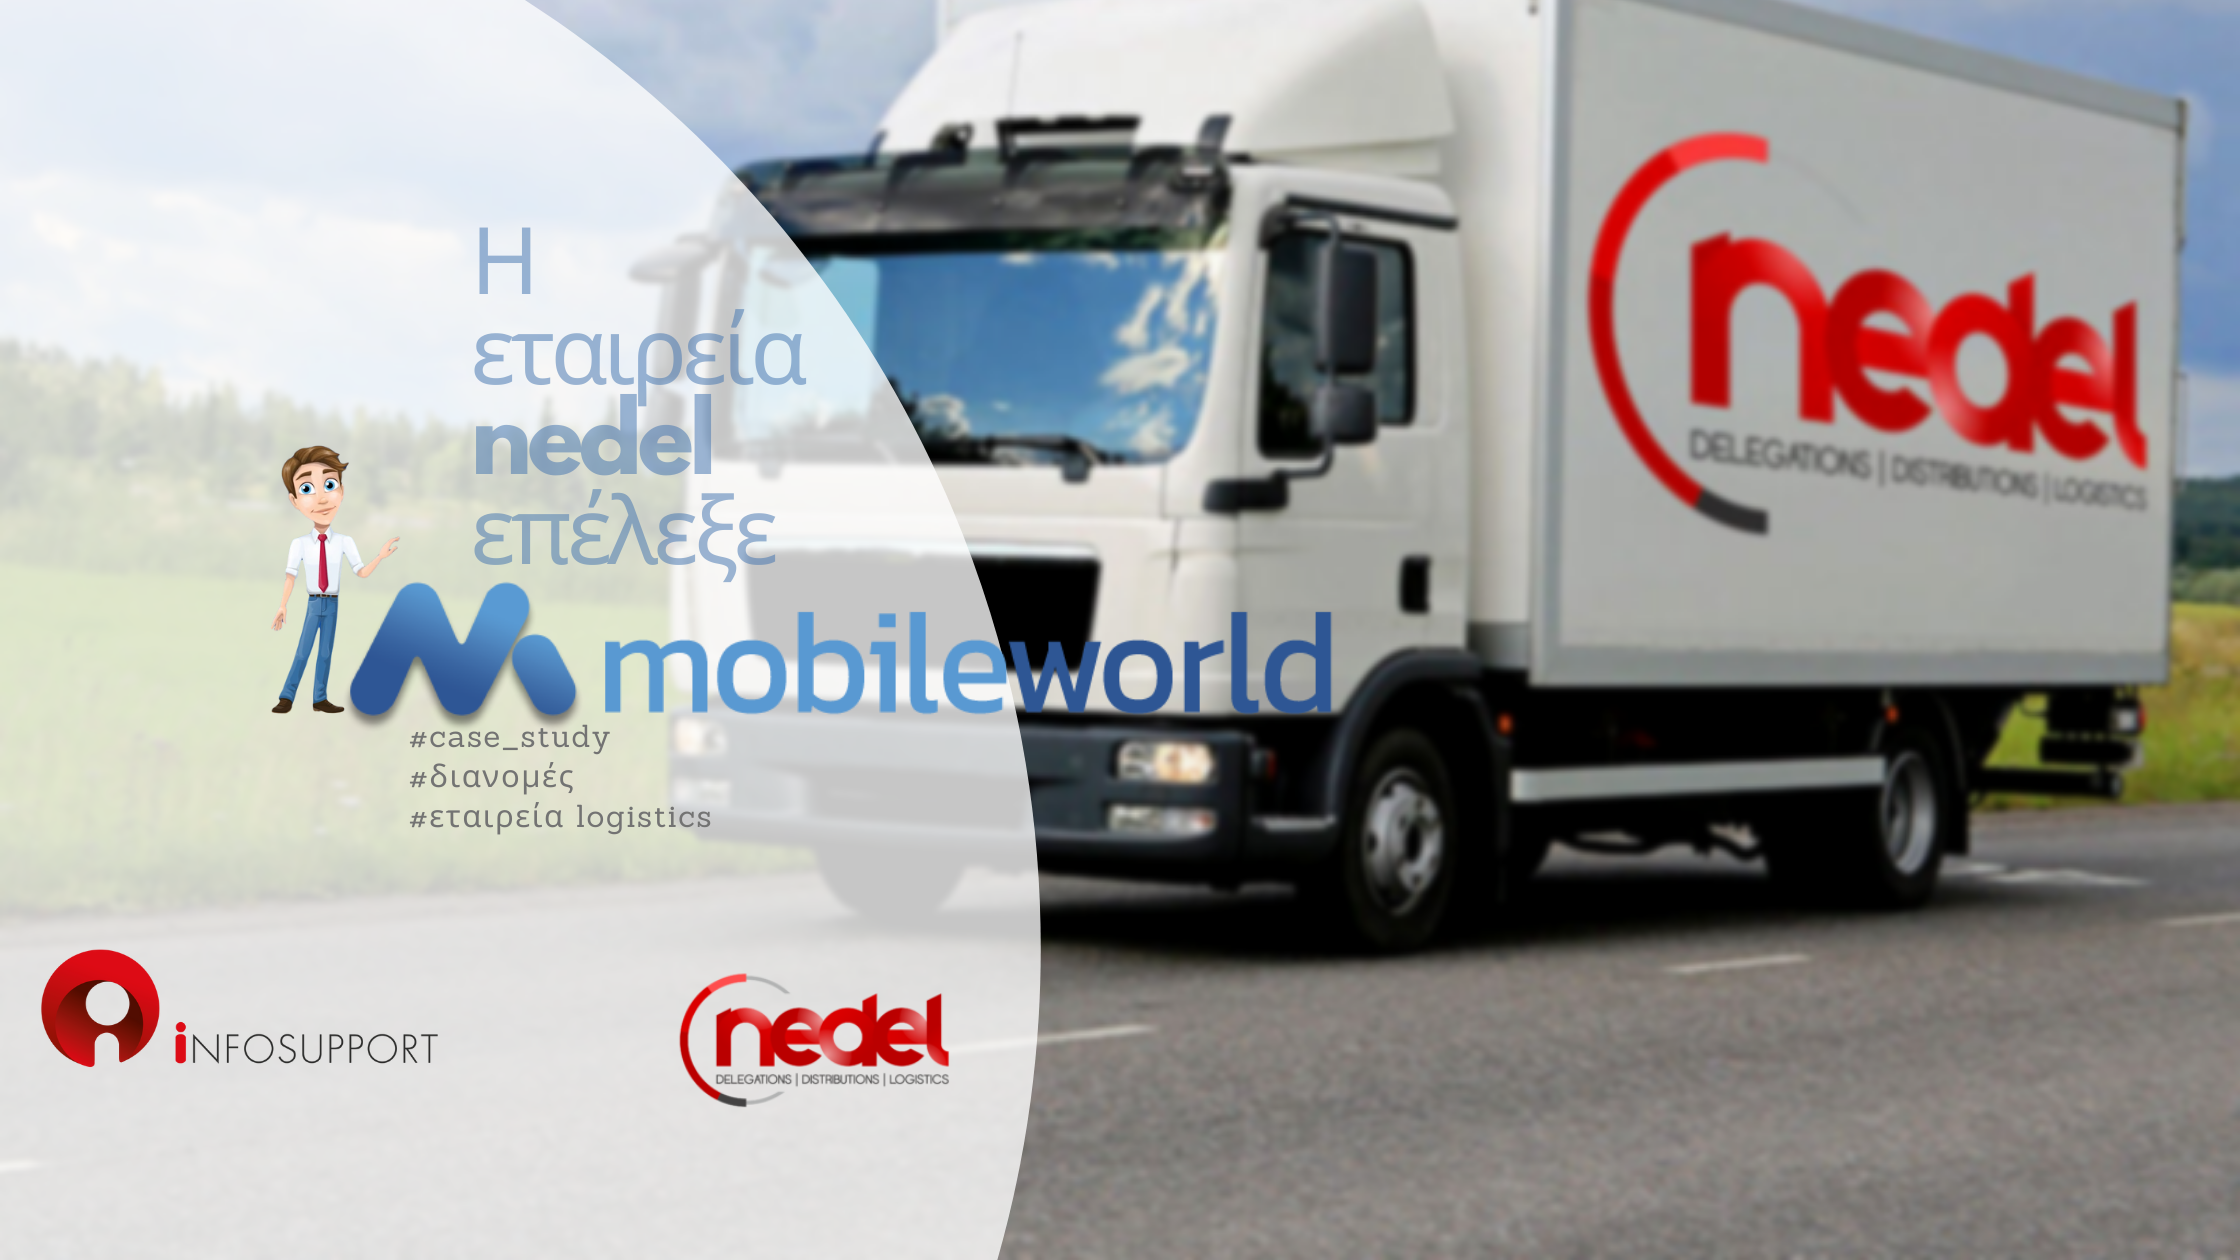 mobileworld: case study Nedel